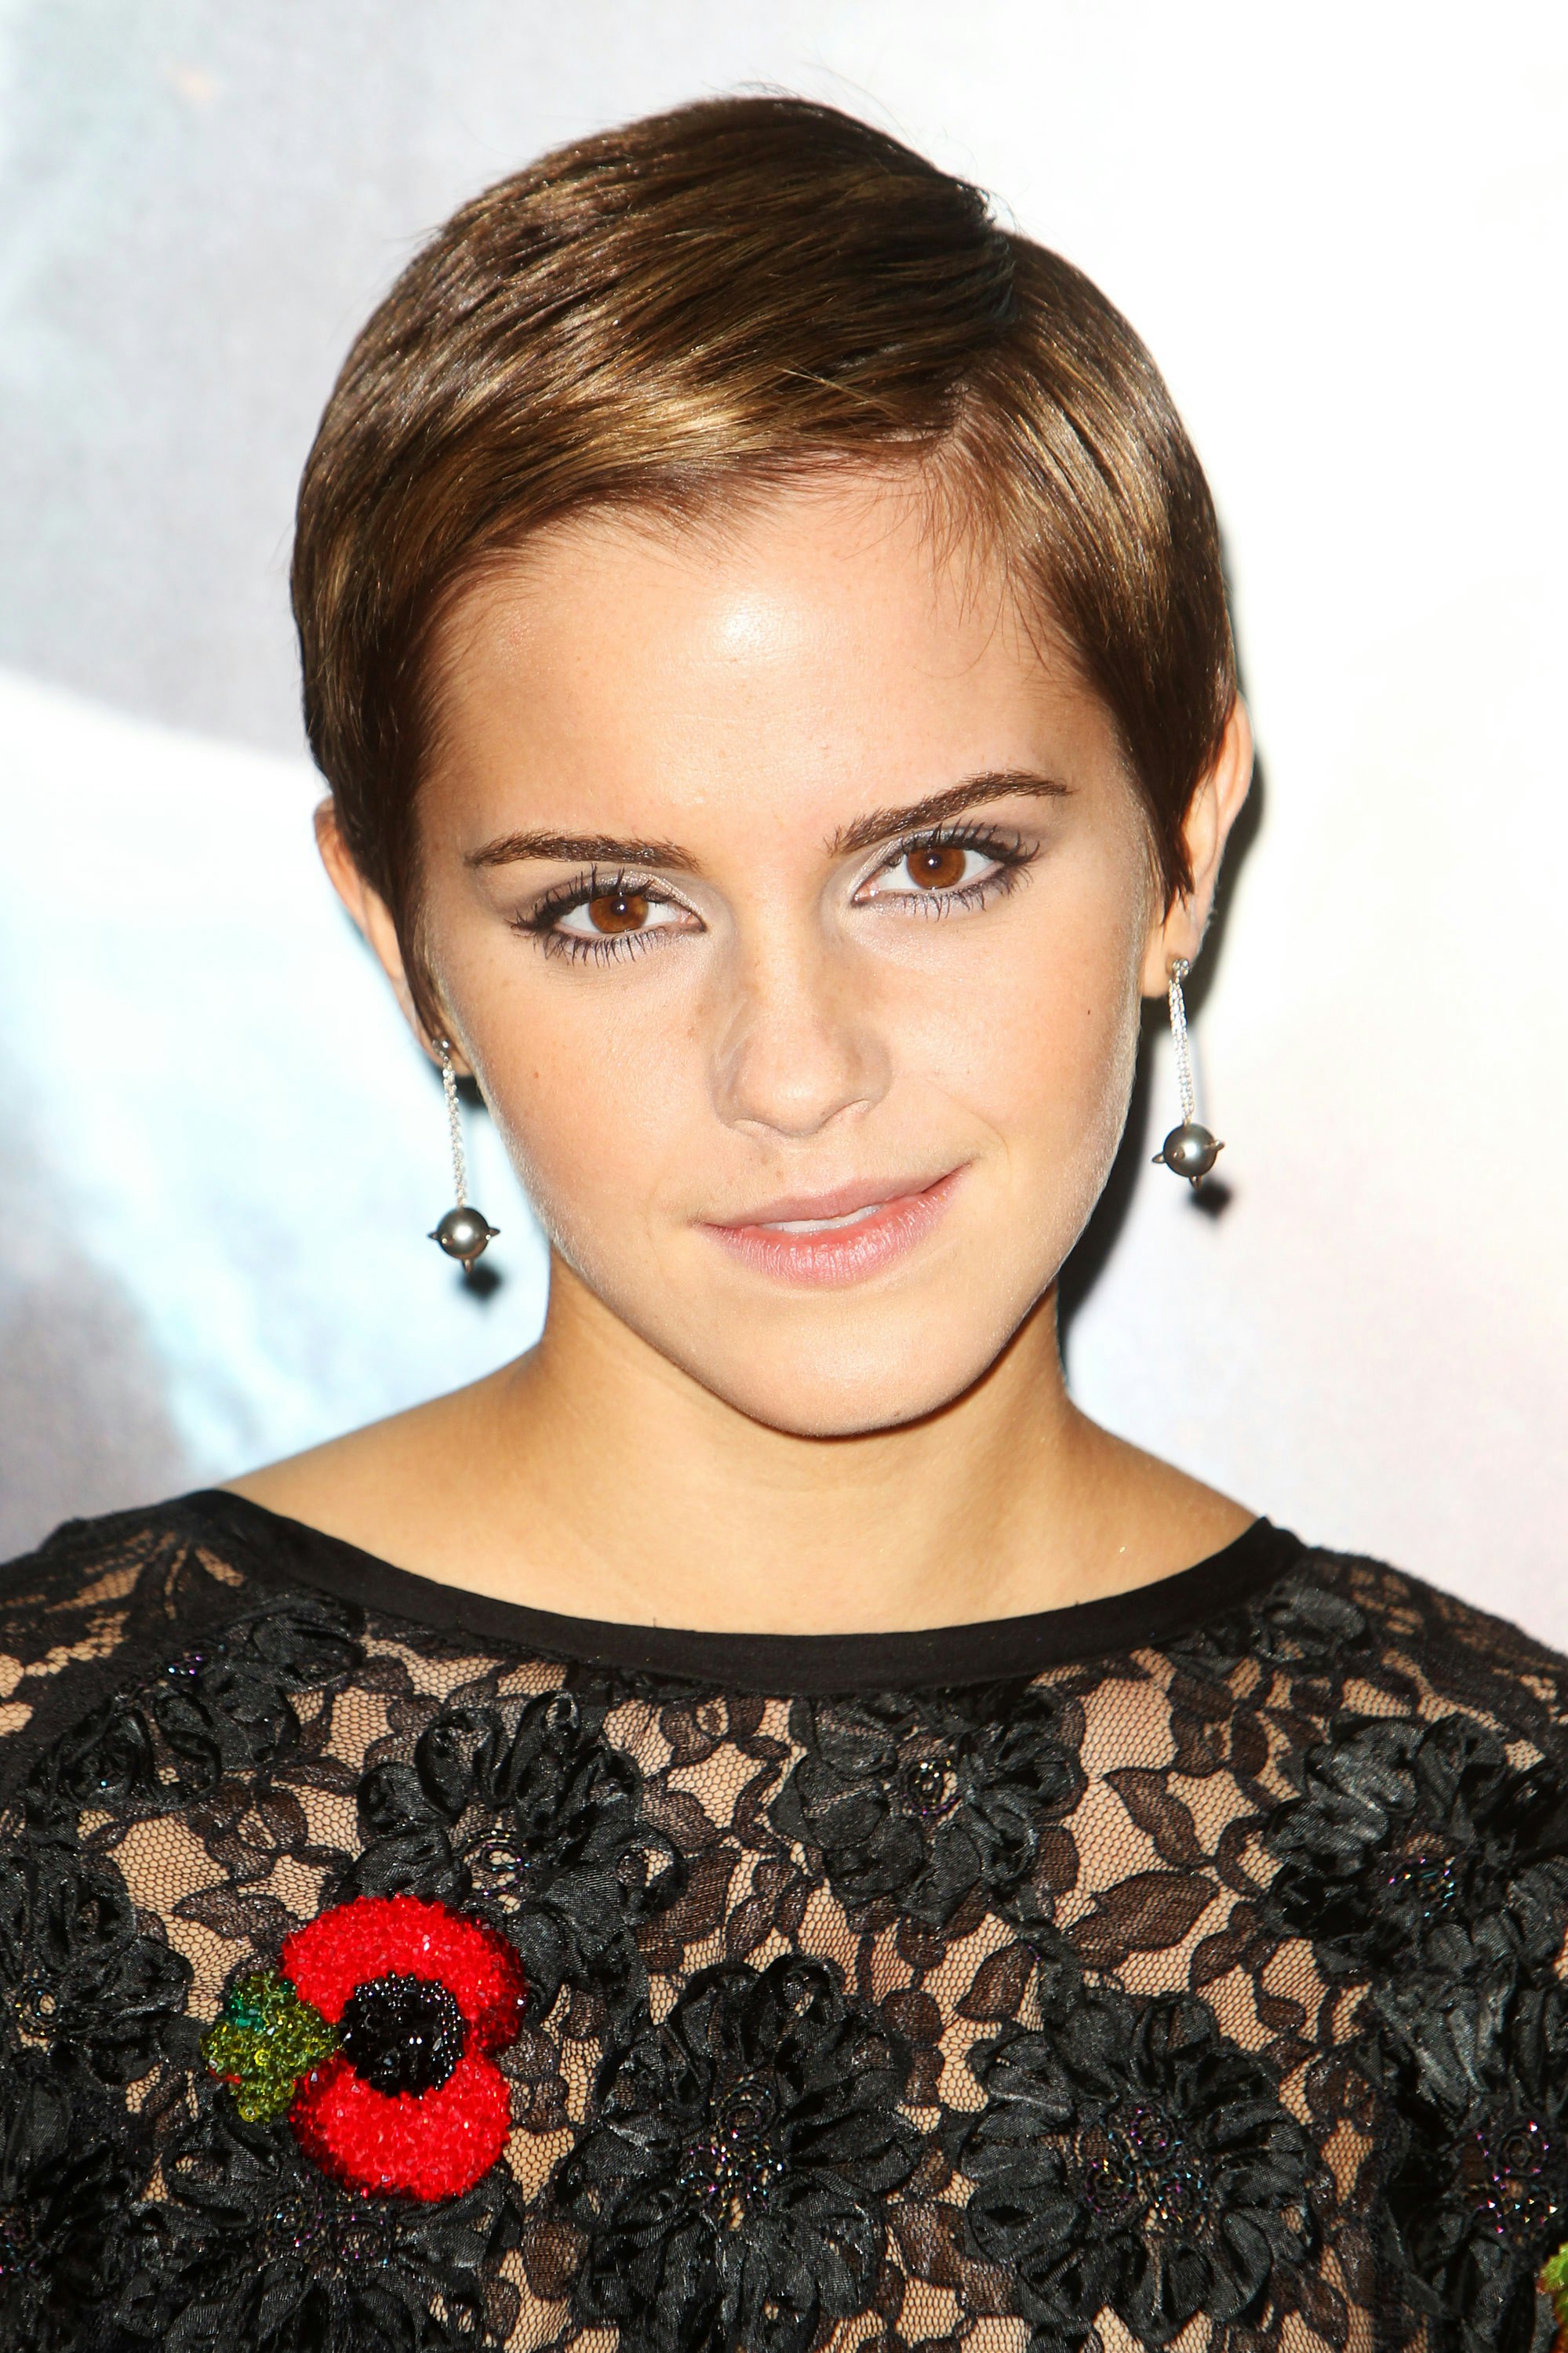 Emma Watson's new super short hair